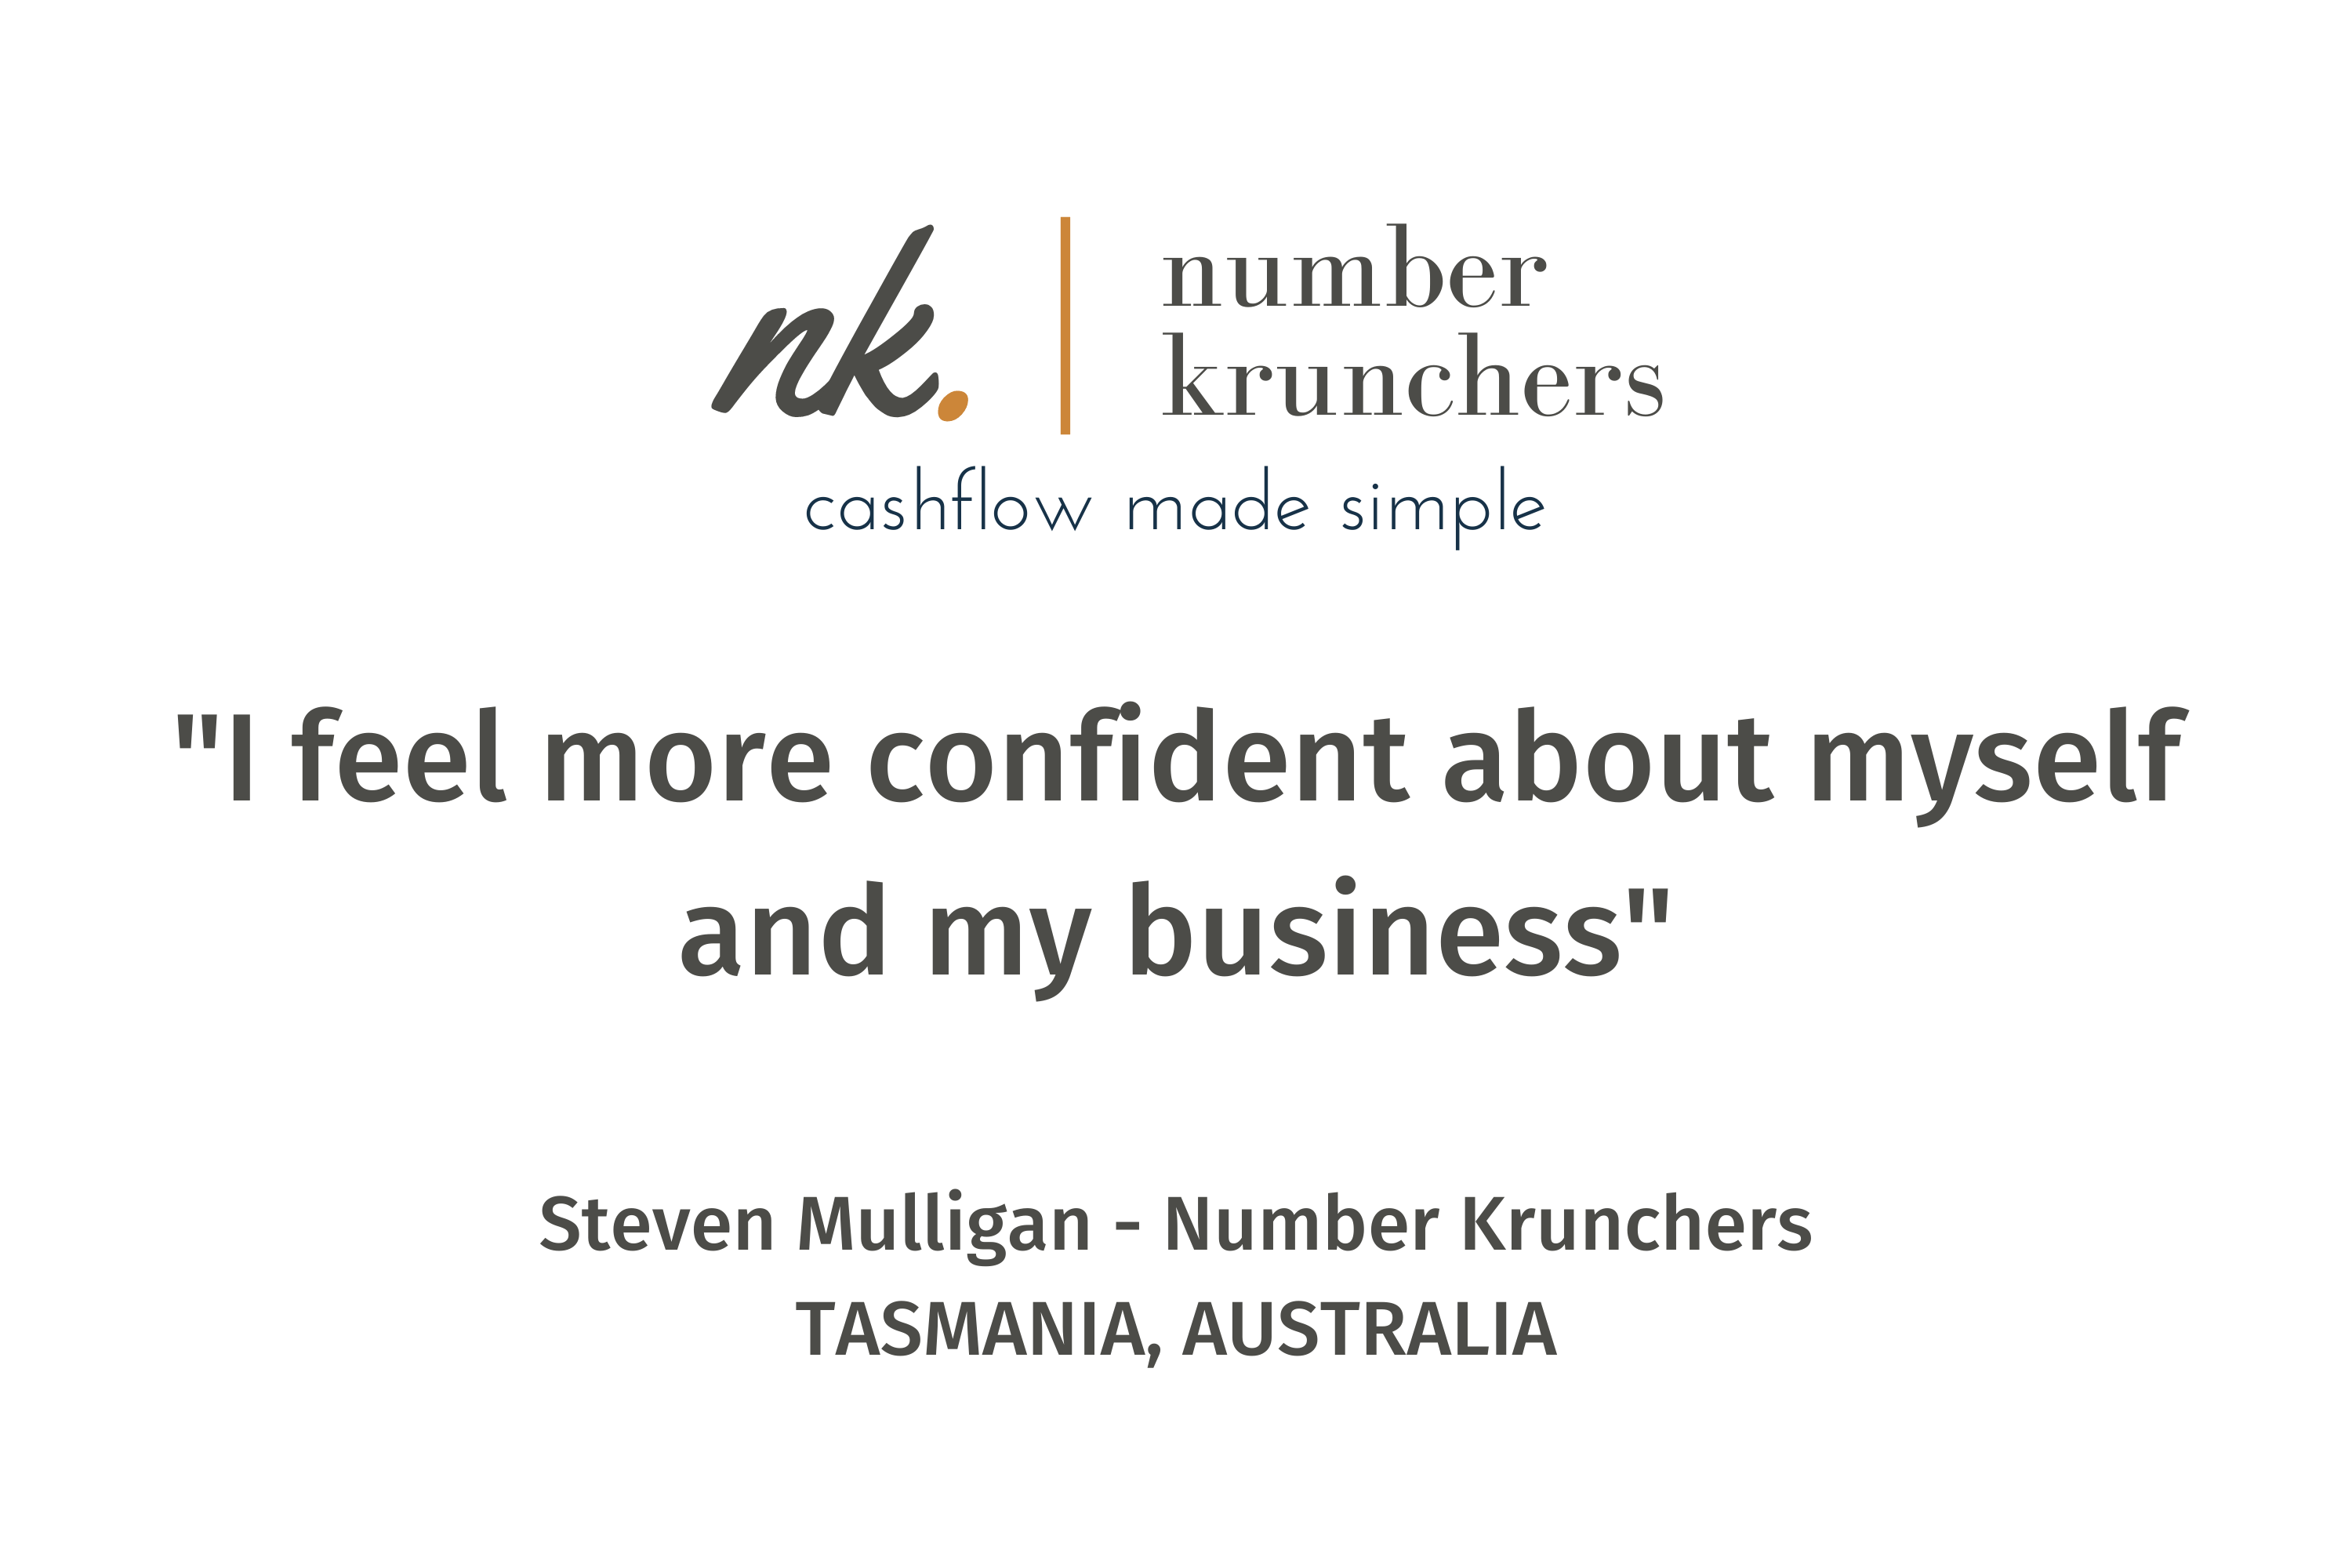 Steven Mulligan - Number Krunchers